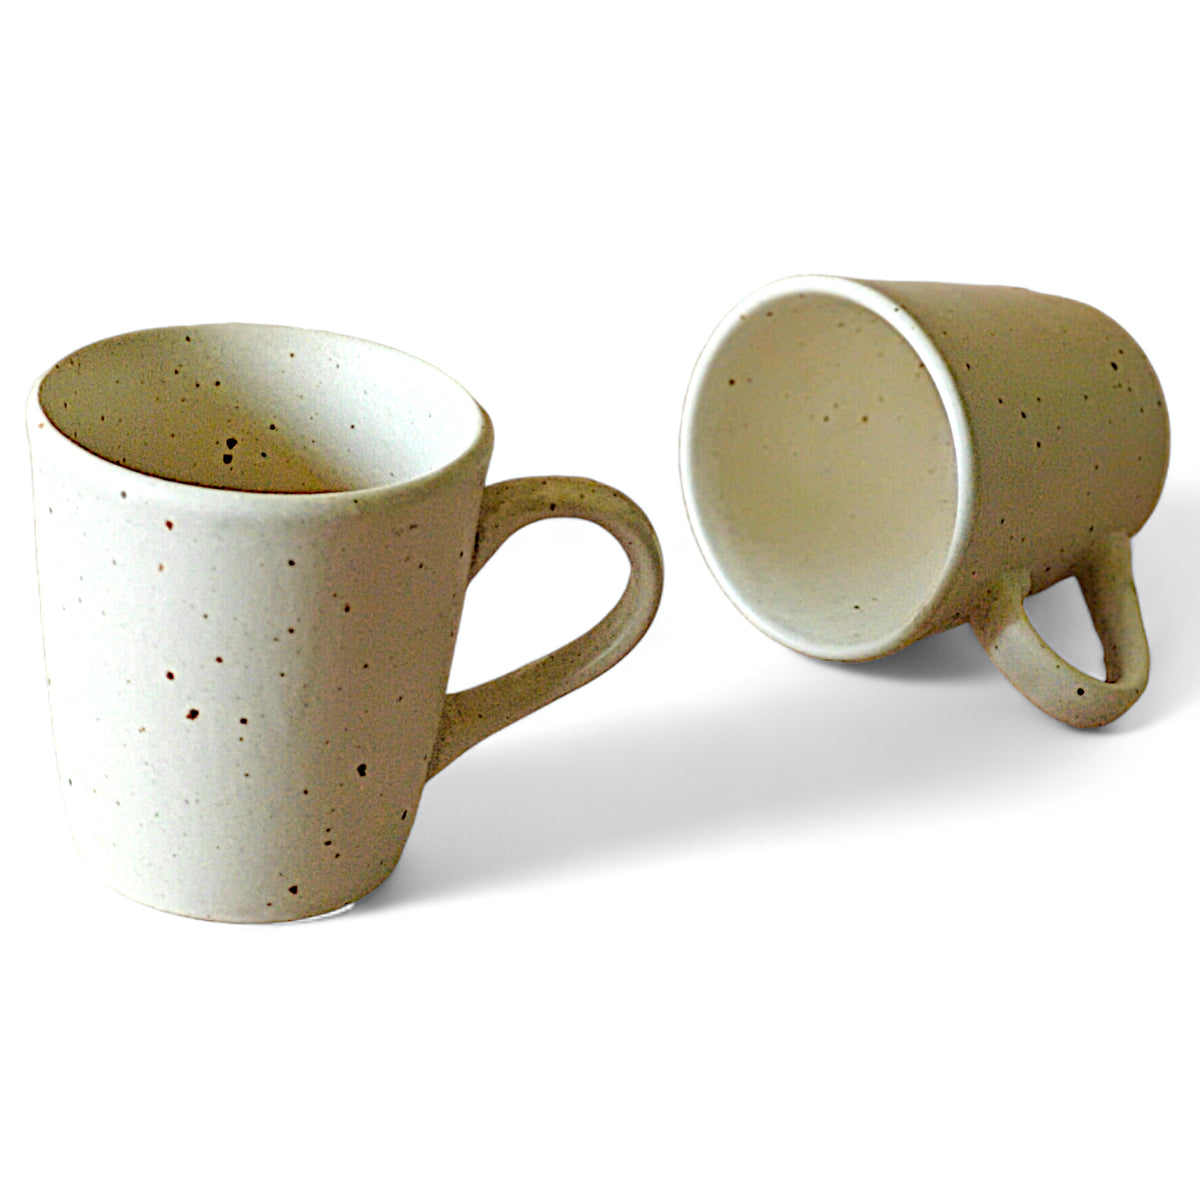 Claymistry Round Ceramic Ivory with Brown Edge Mug | Set of 2 | 13cm * 9cm * 9cm | Matte Finish | Dishwasher, Oven & Microwave Safe | Coffee, Tea, Green Tea & Milk Mug | Premium Kitchen Crockery